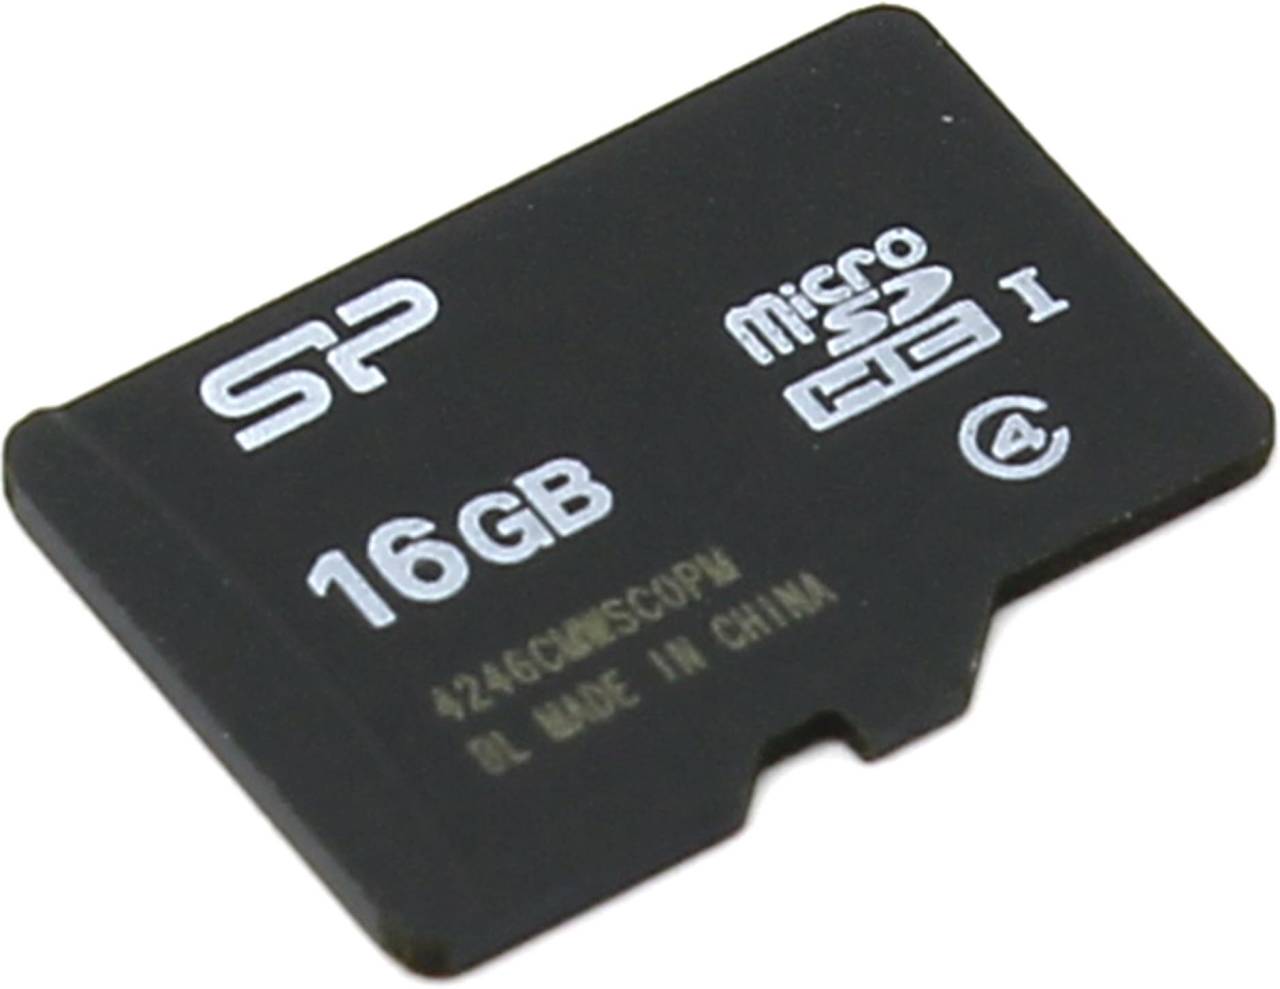    microSDHC 16Gb Silicon Power [SP016GBSTH004V10] Class 4